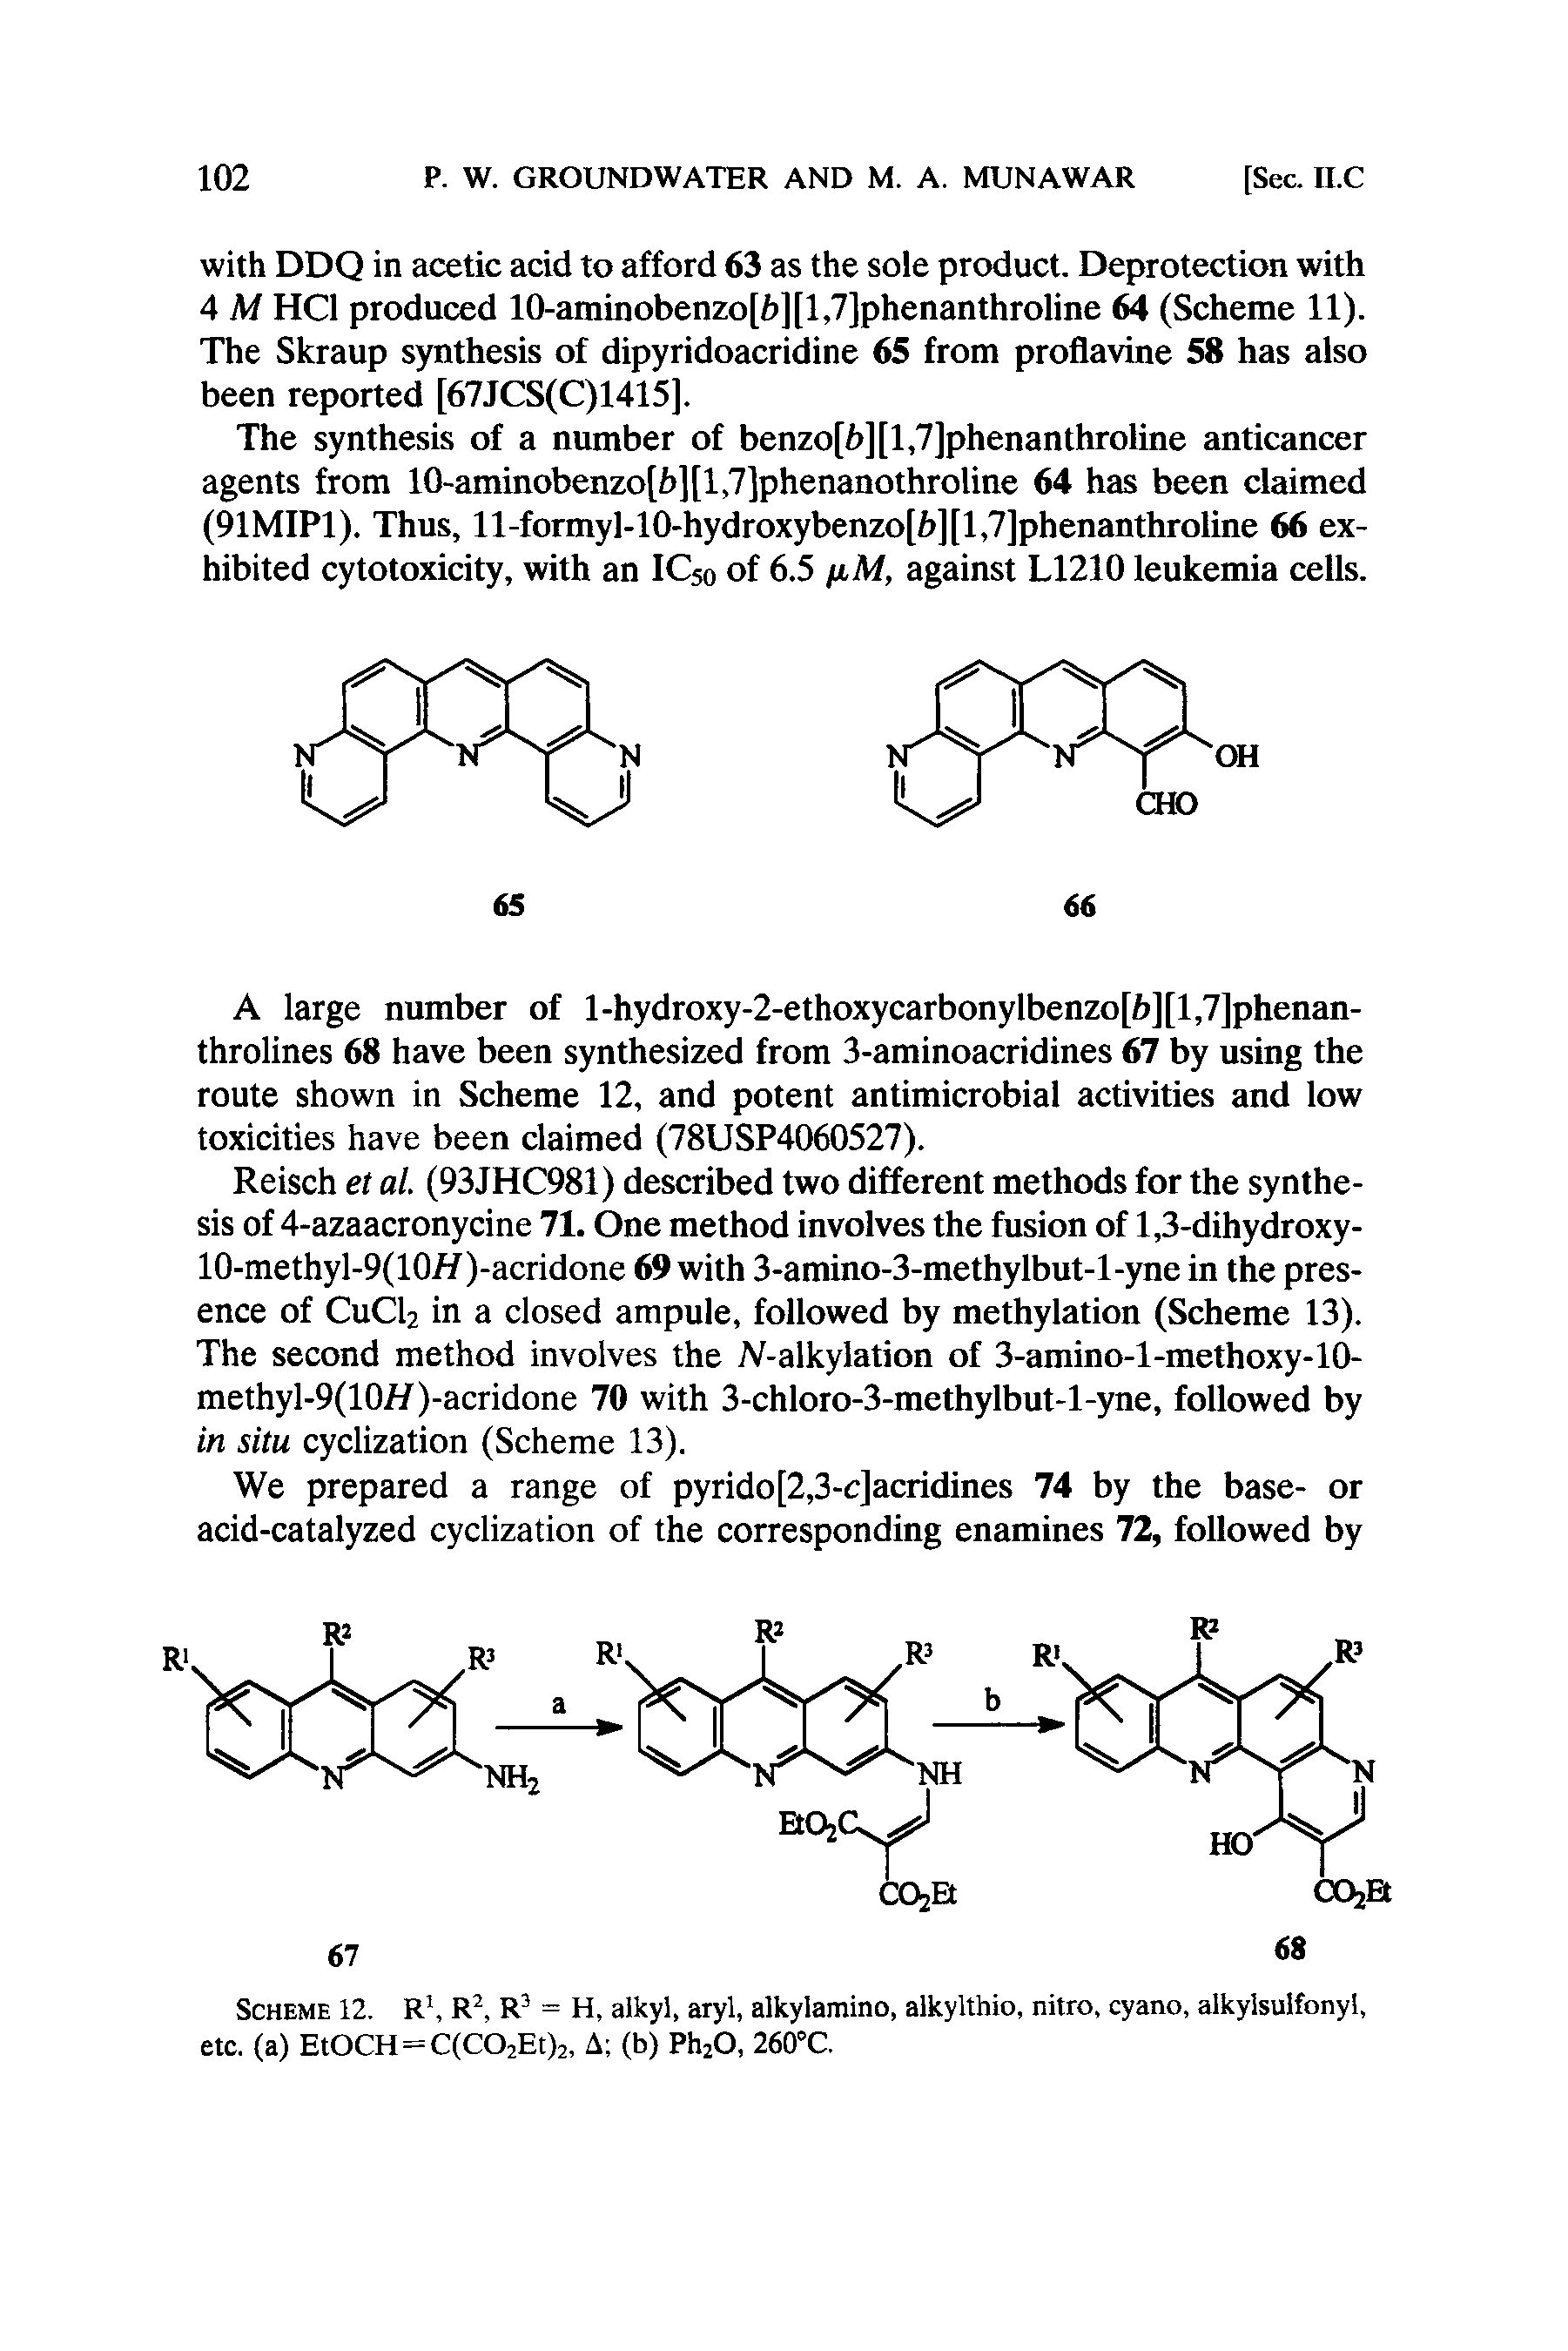 Scheme 12. R R, R = H, alkyl, aryl, alkylamino, alkylthio, nitro, cyano, alkylsulfonyl,...